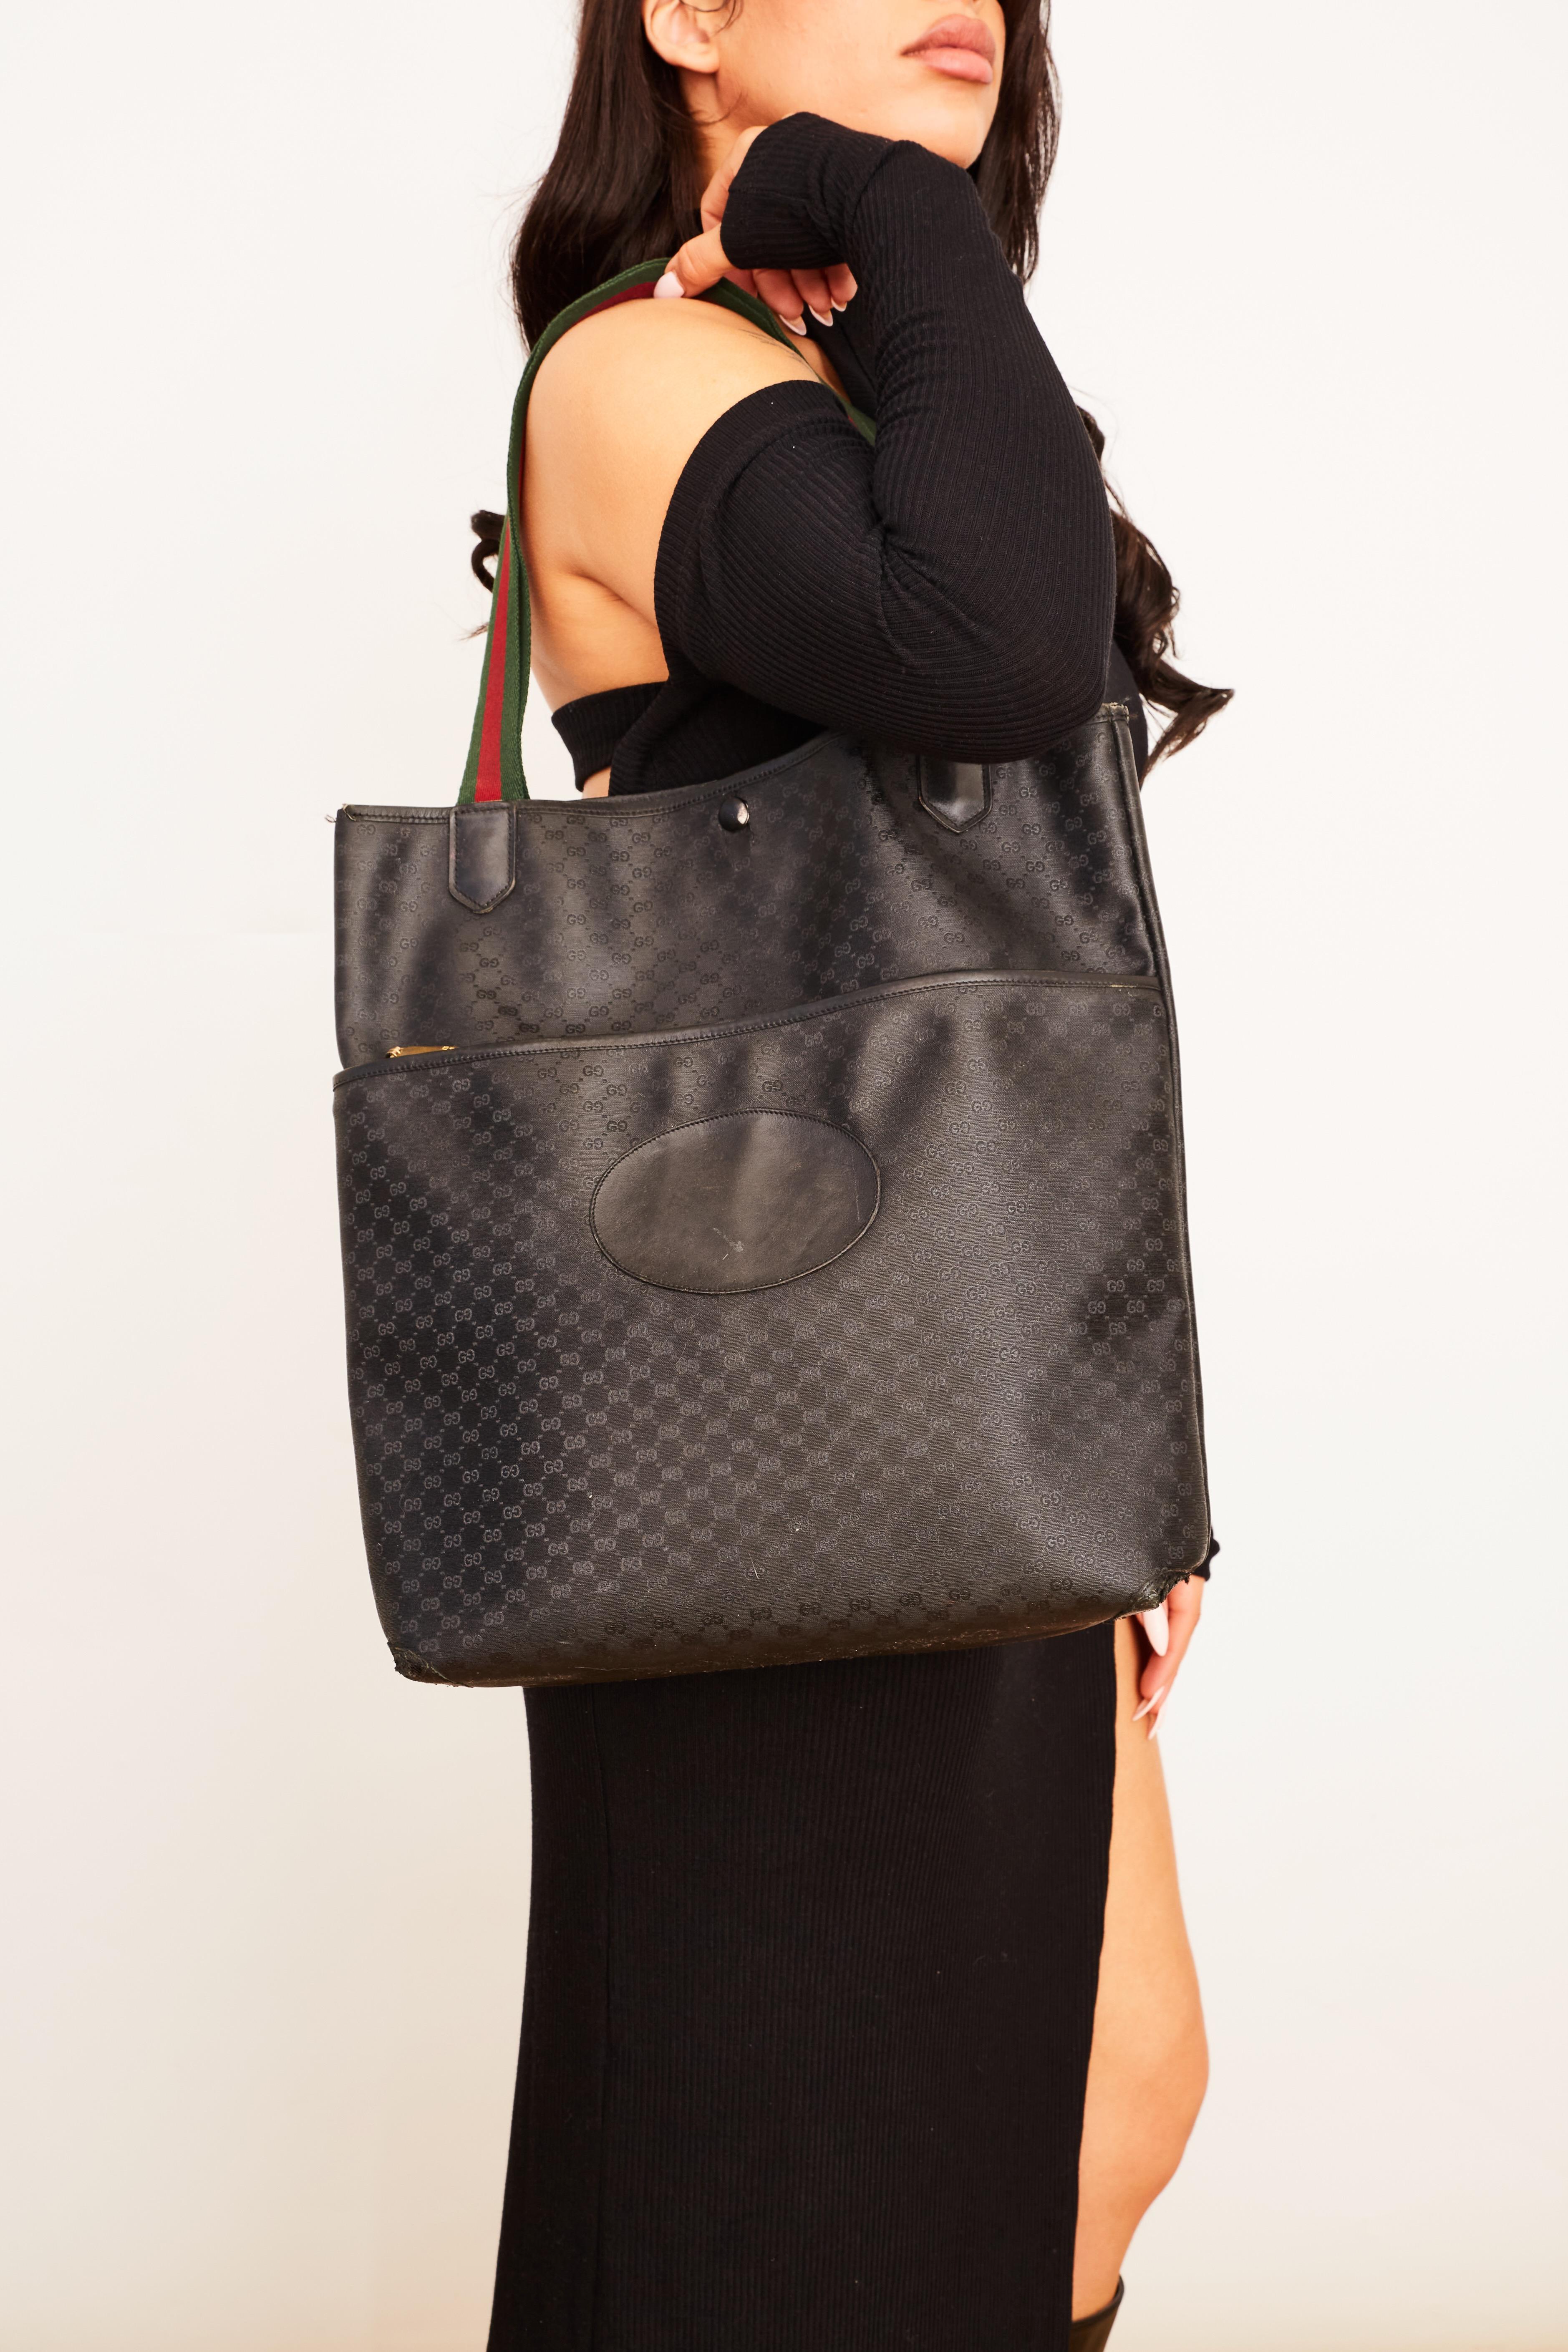 Gucci Vintage GG Supreme Black Web Straps Tote Bag For Sale 5